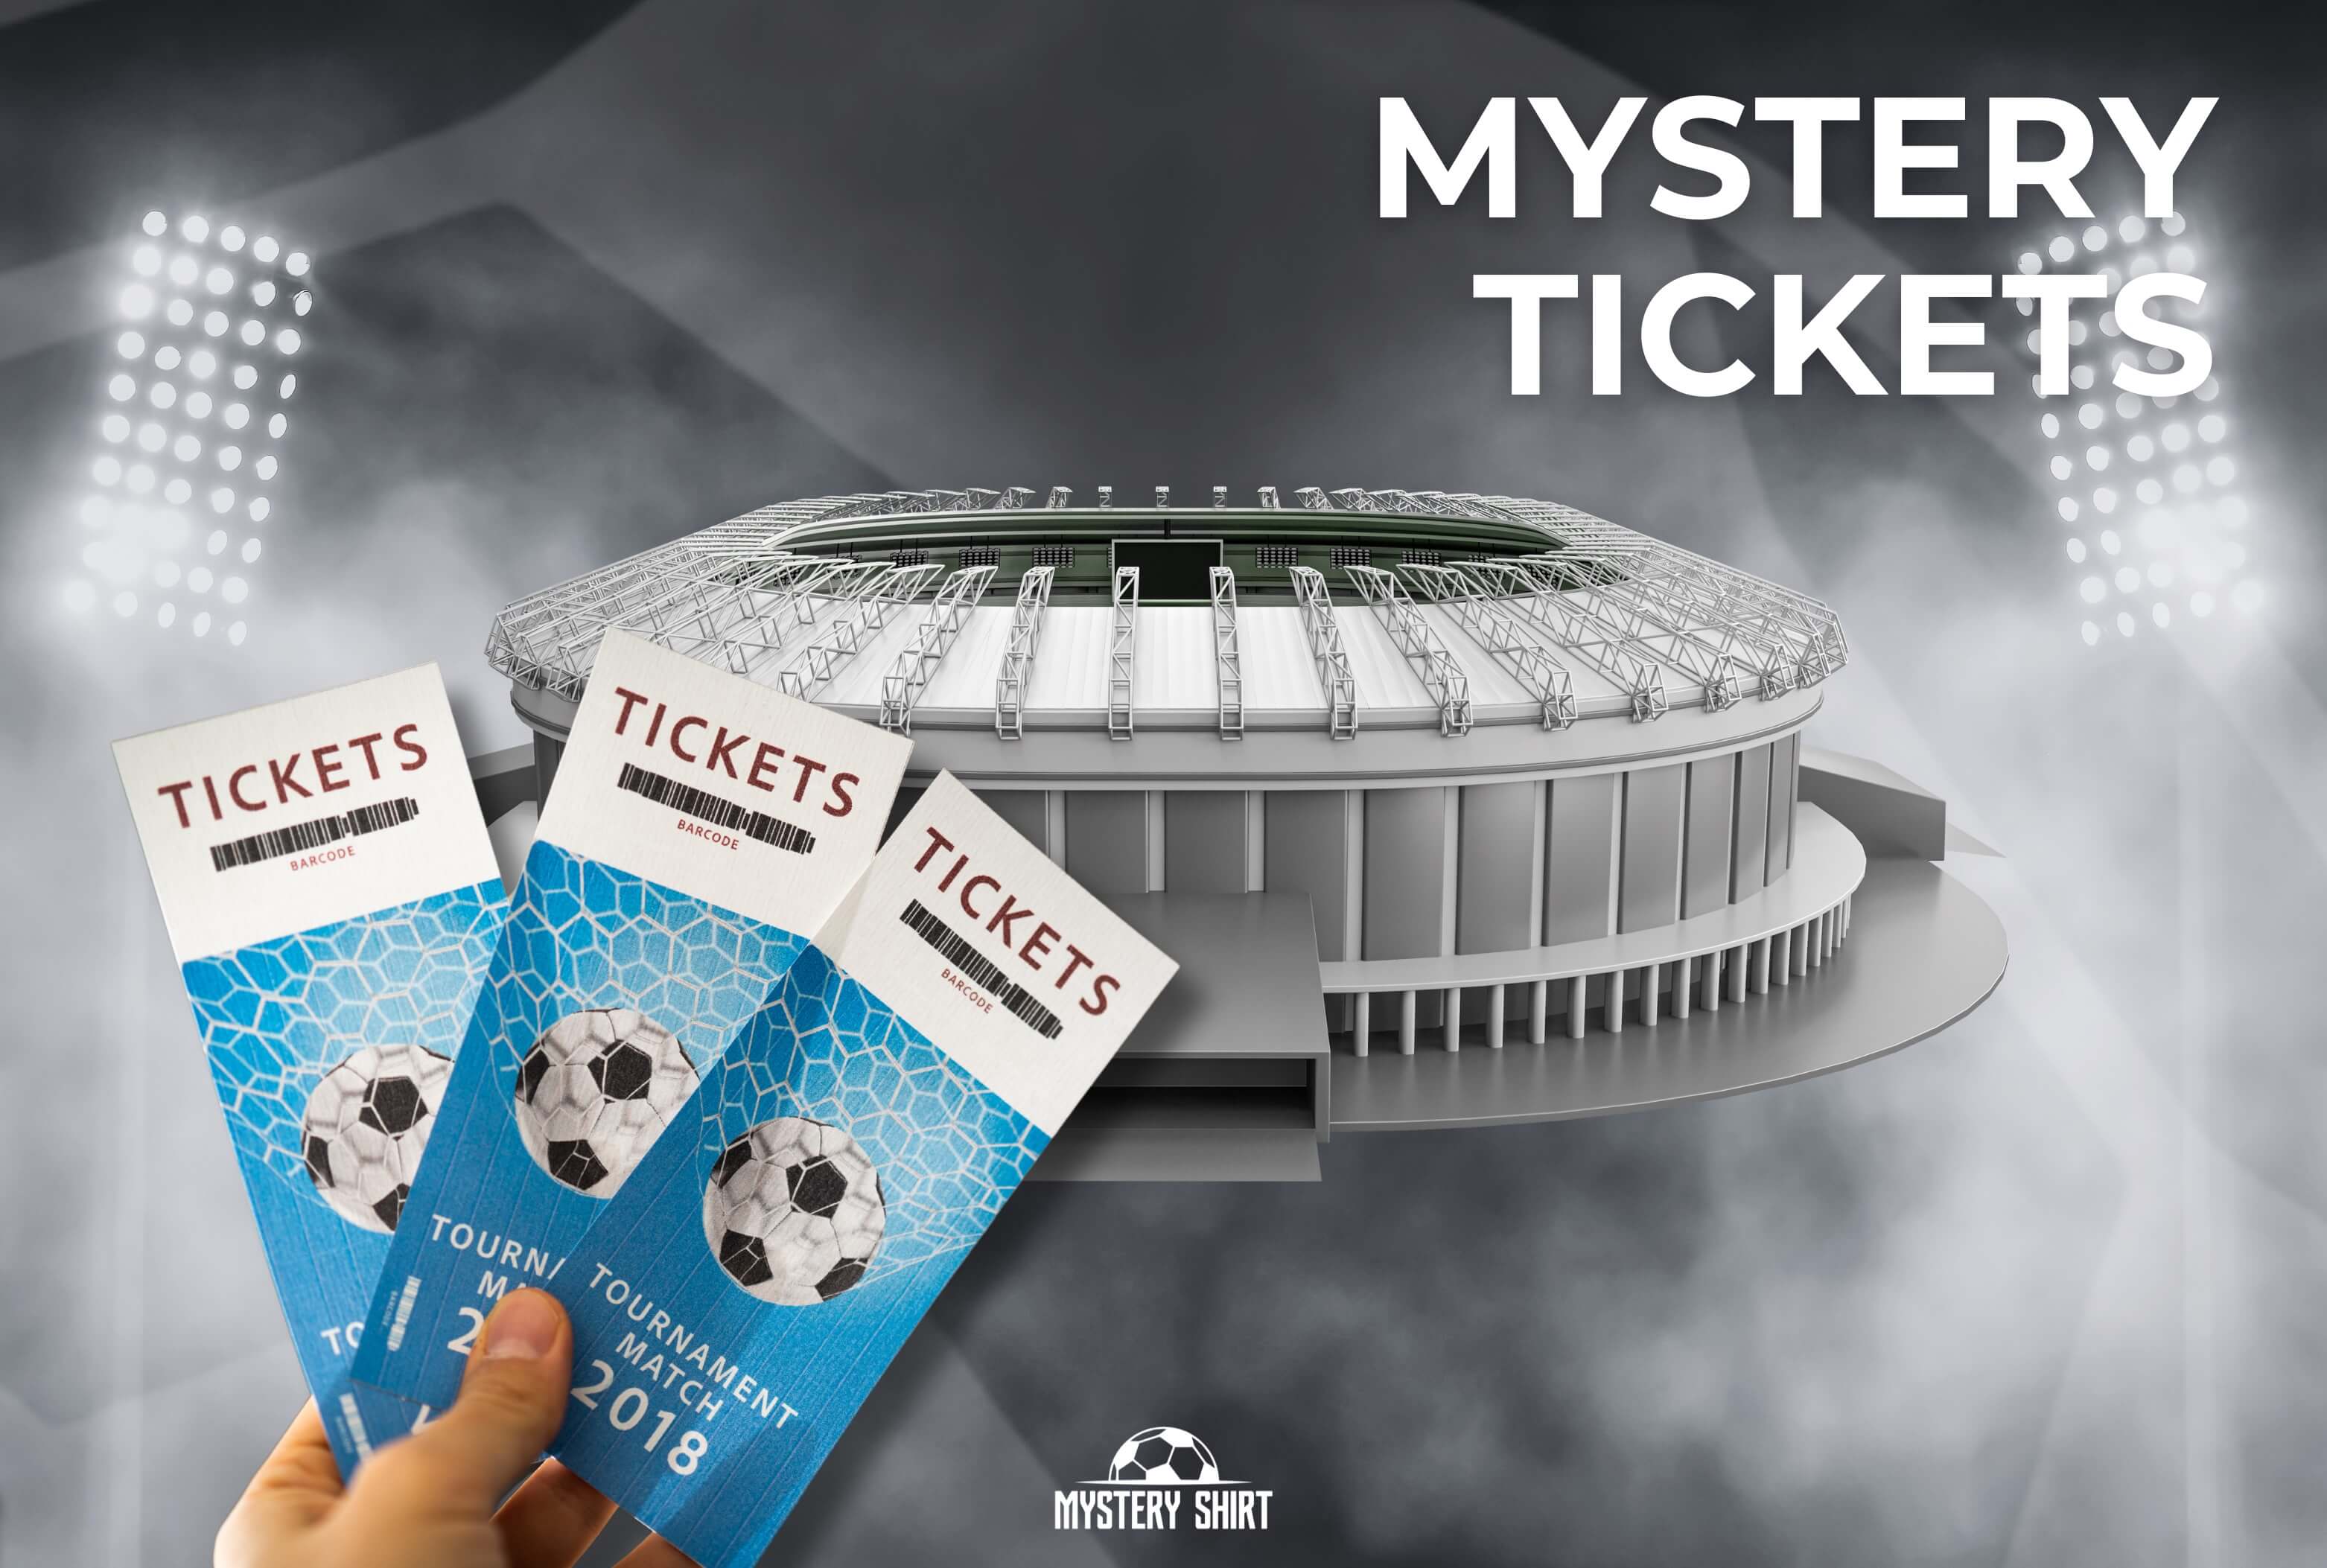 Mystery tickets